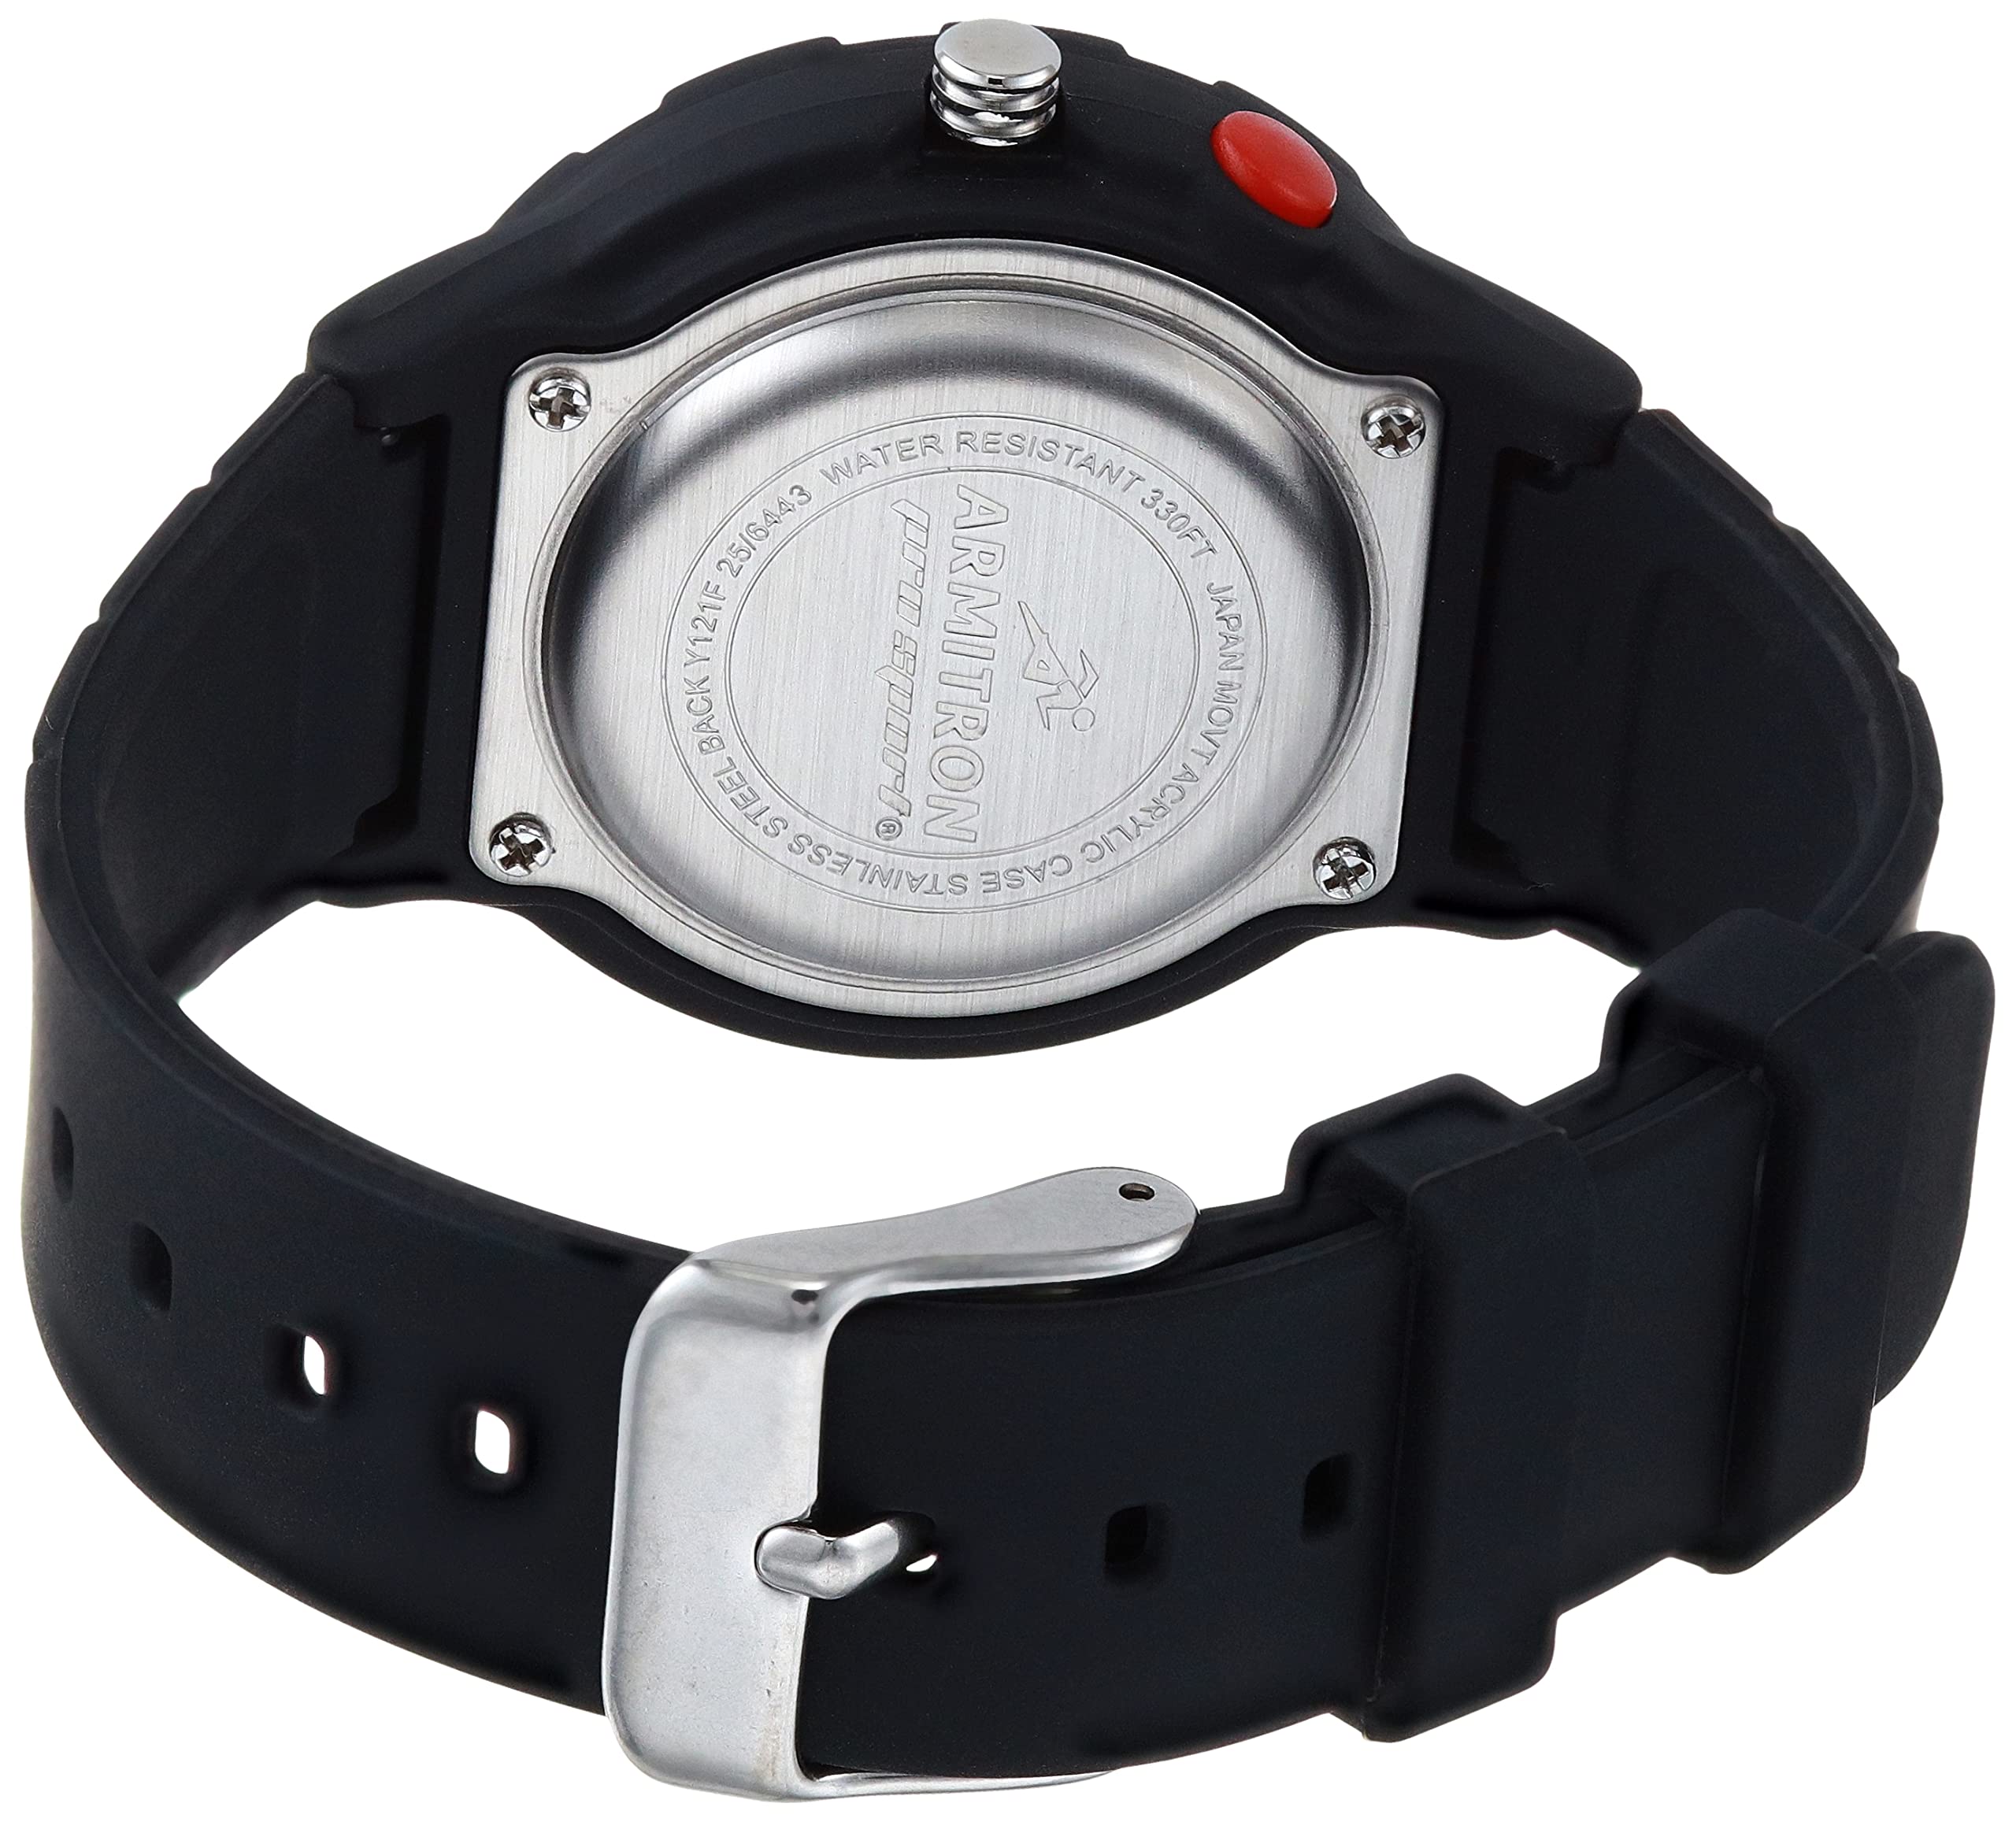 Armitron Sport Unisex Easy to Read Silicone Strap Watch, 25/6443